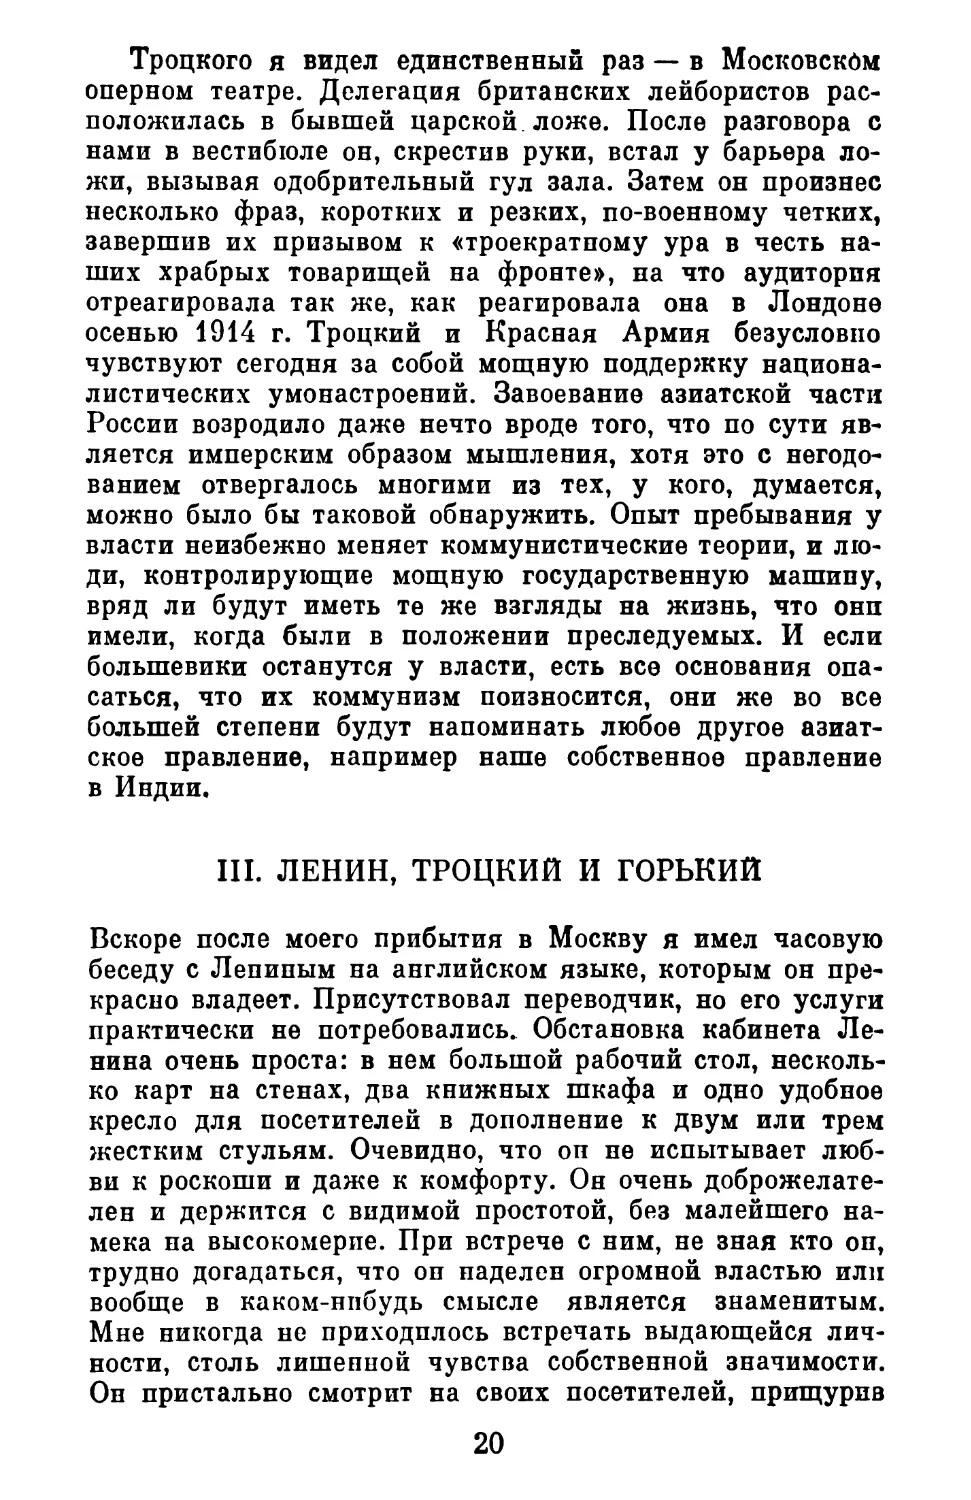 III. Ленин, Троцкий и Горький